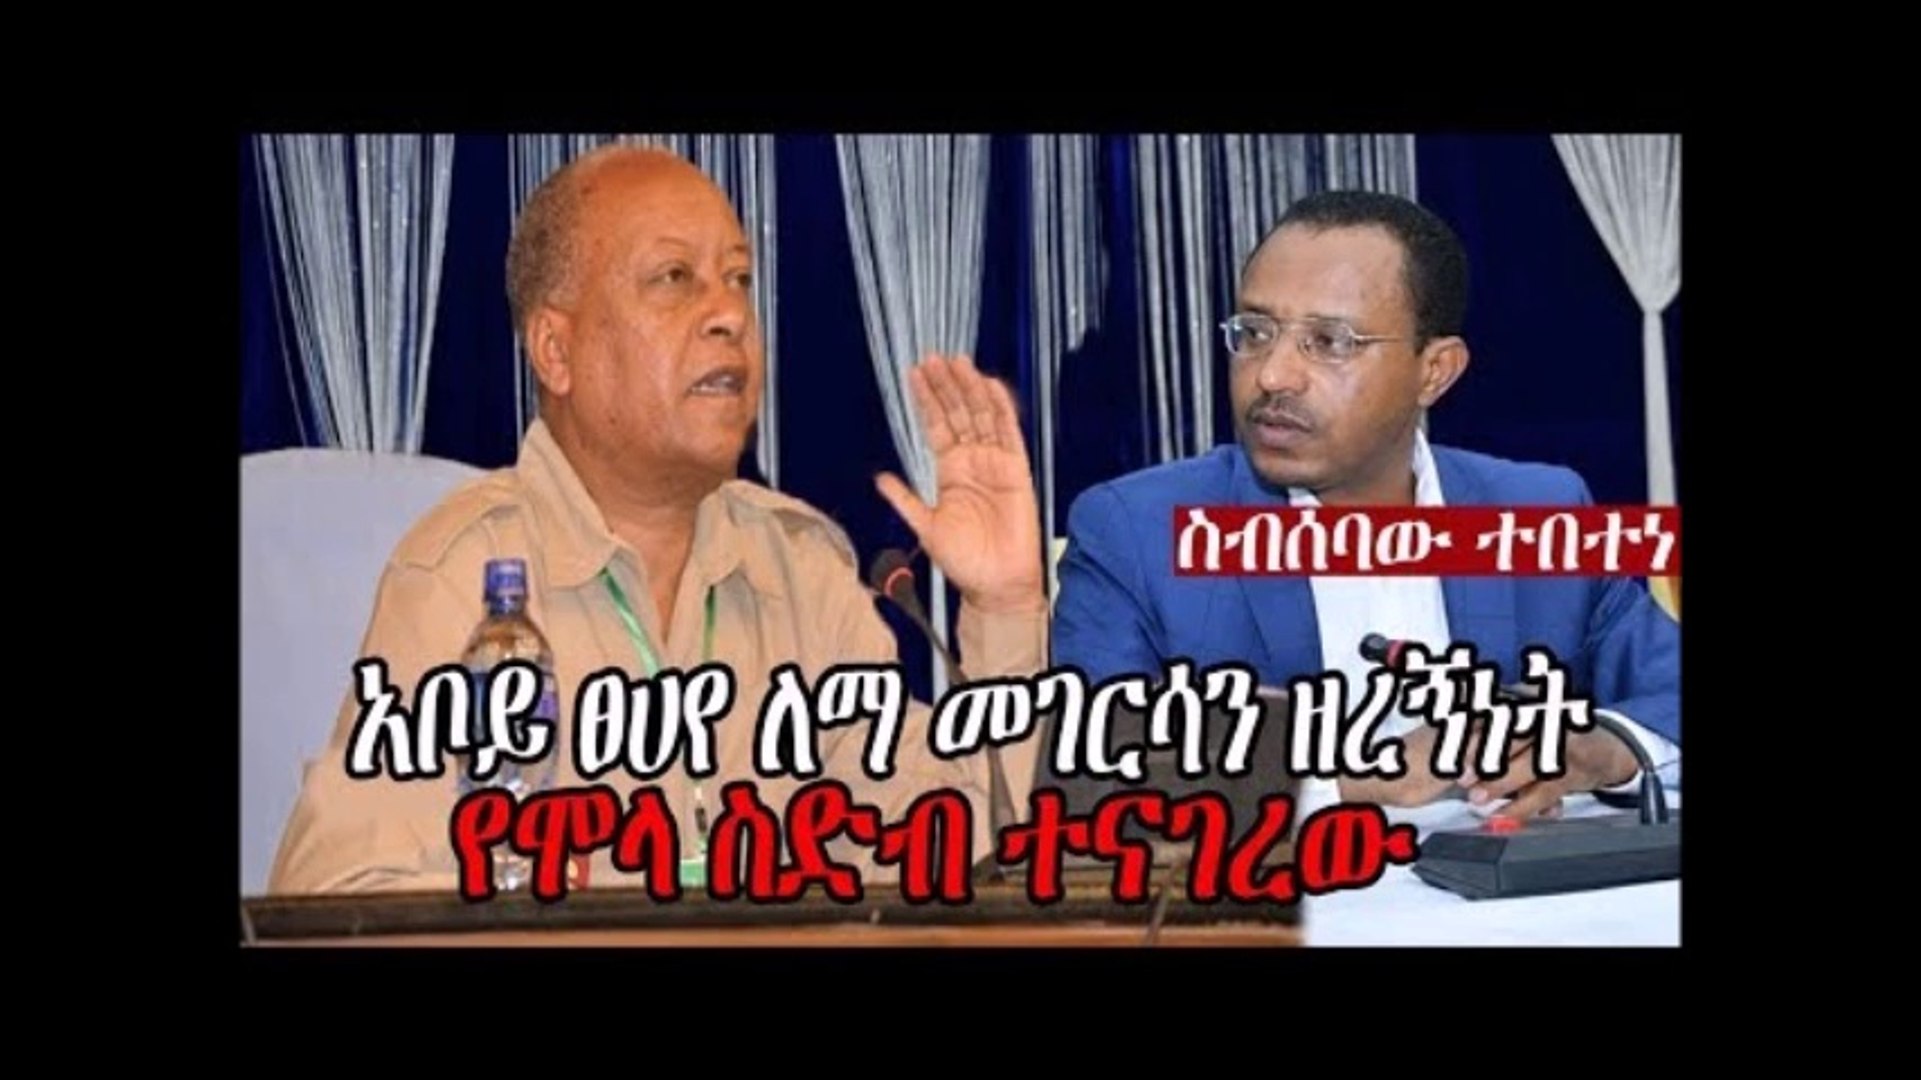 Daily Ethiopian News